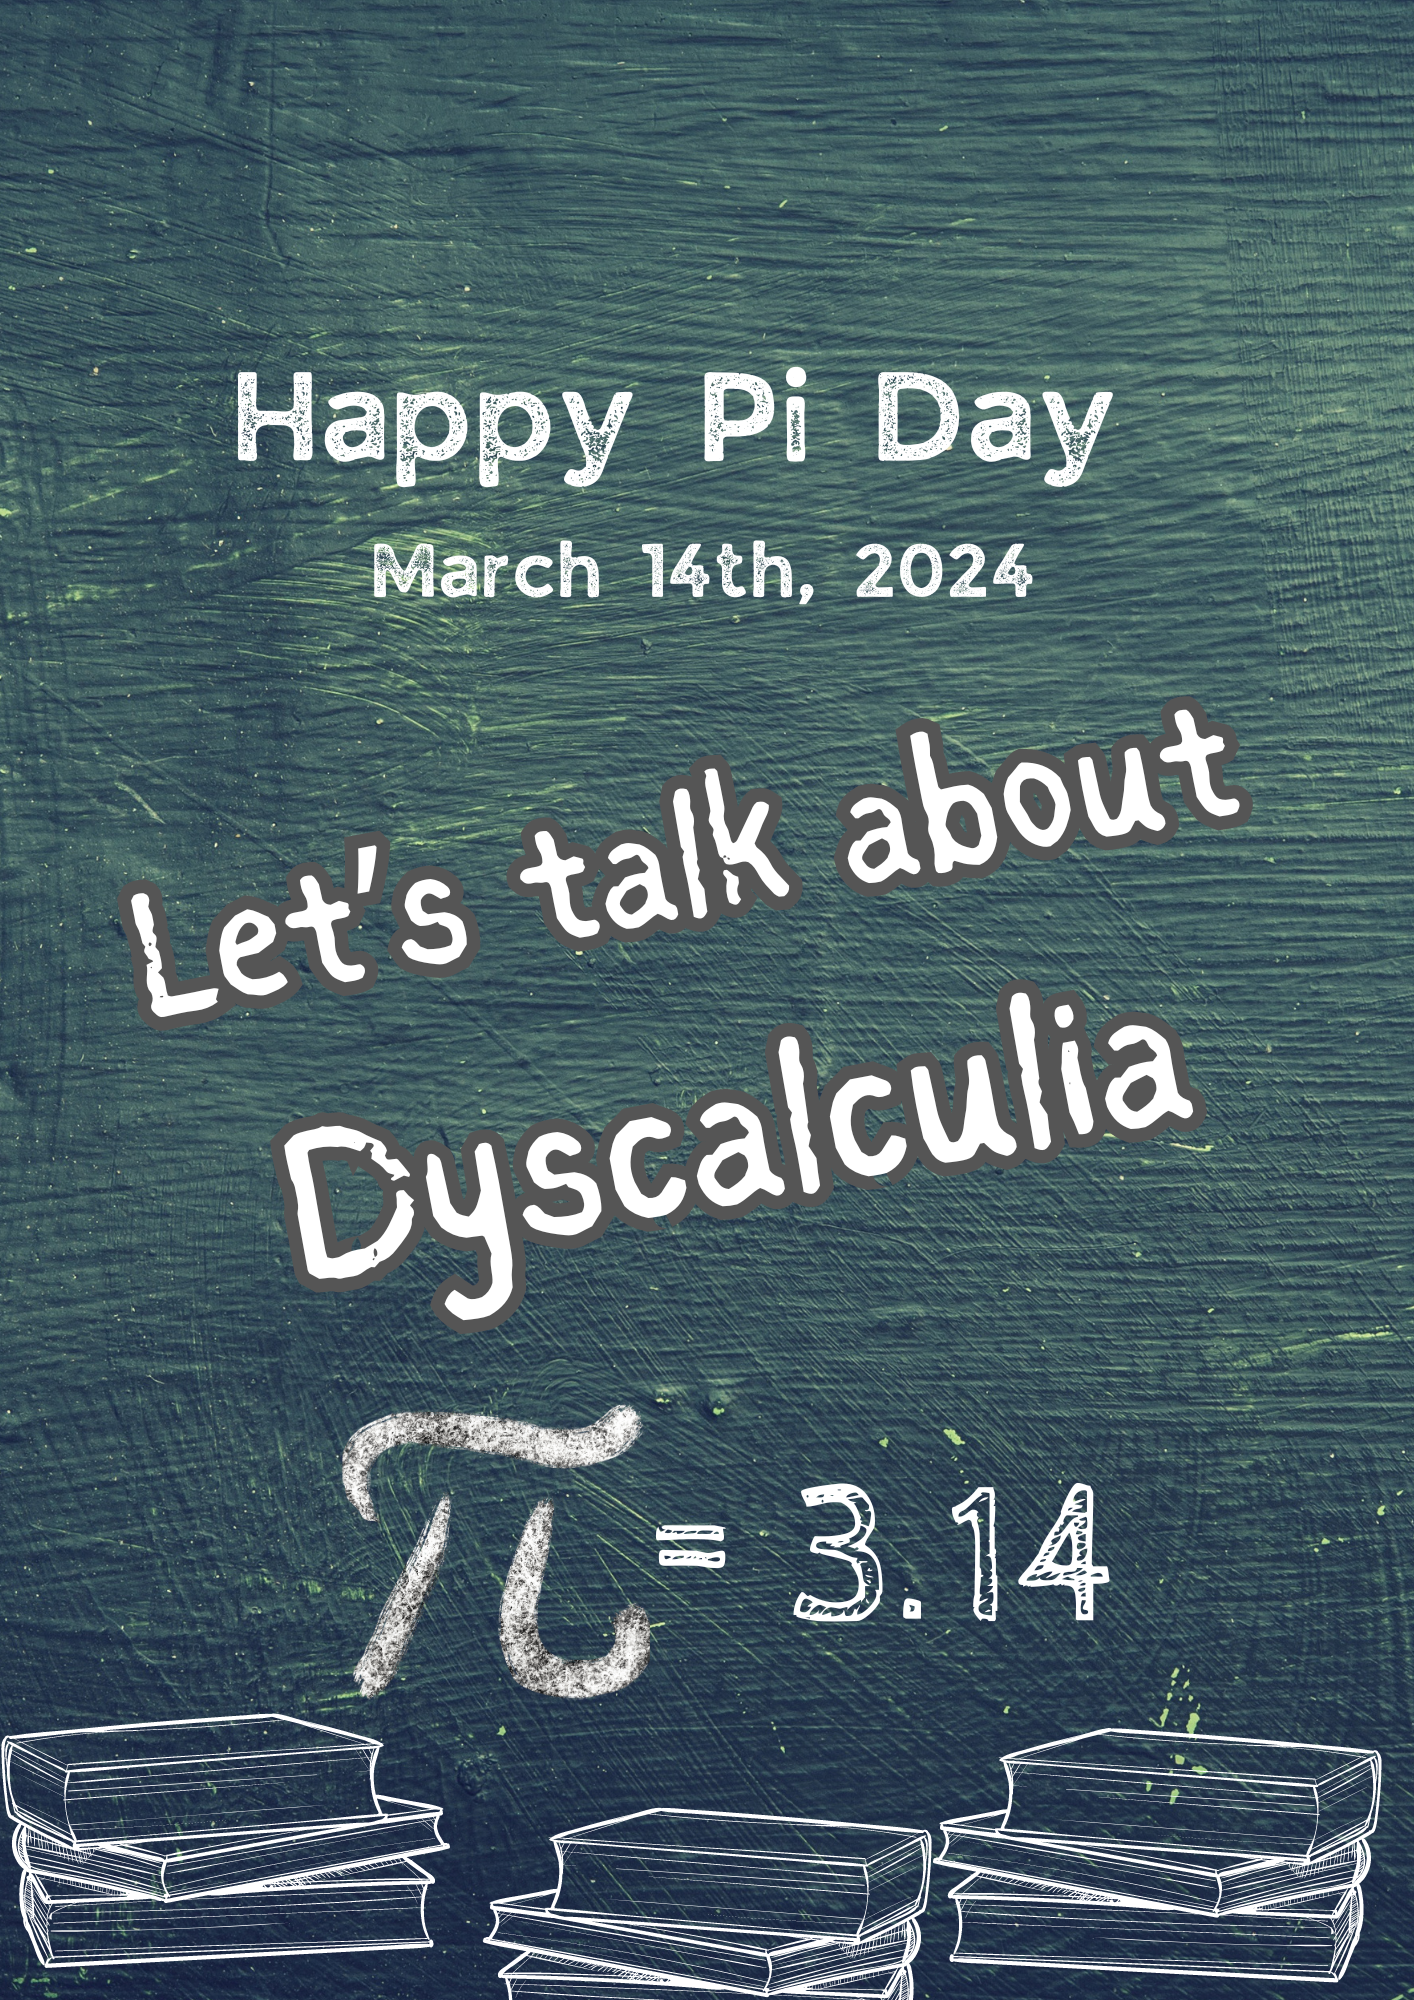 Raising Awareness: Dyscalculia on International Pi Day